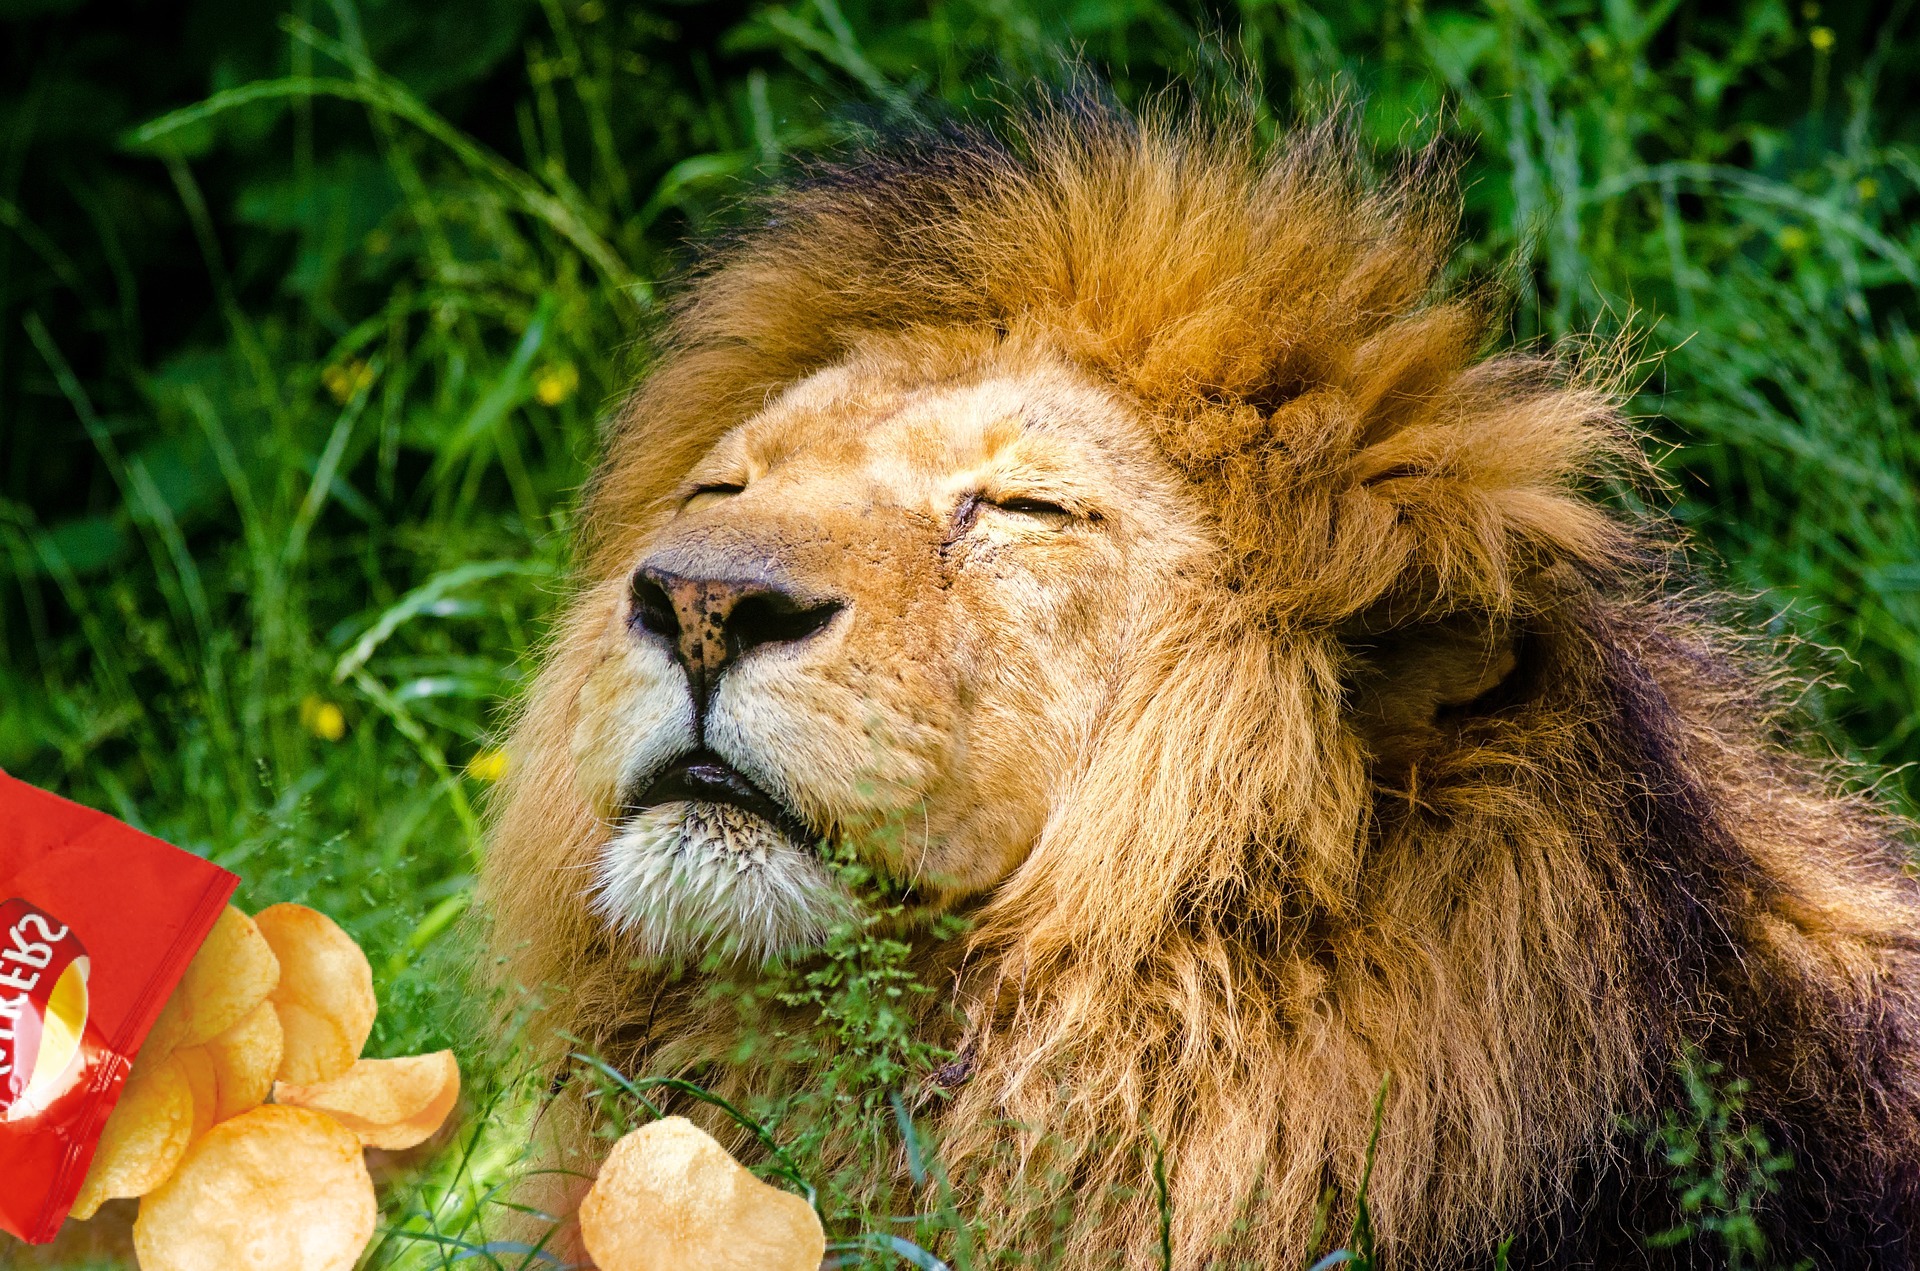 A lion eating a bag of crisps